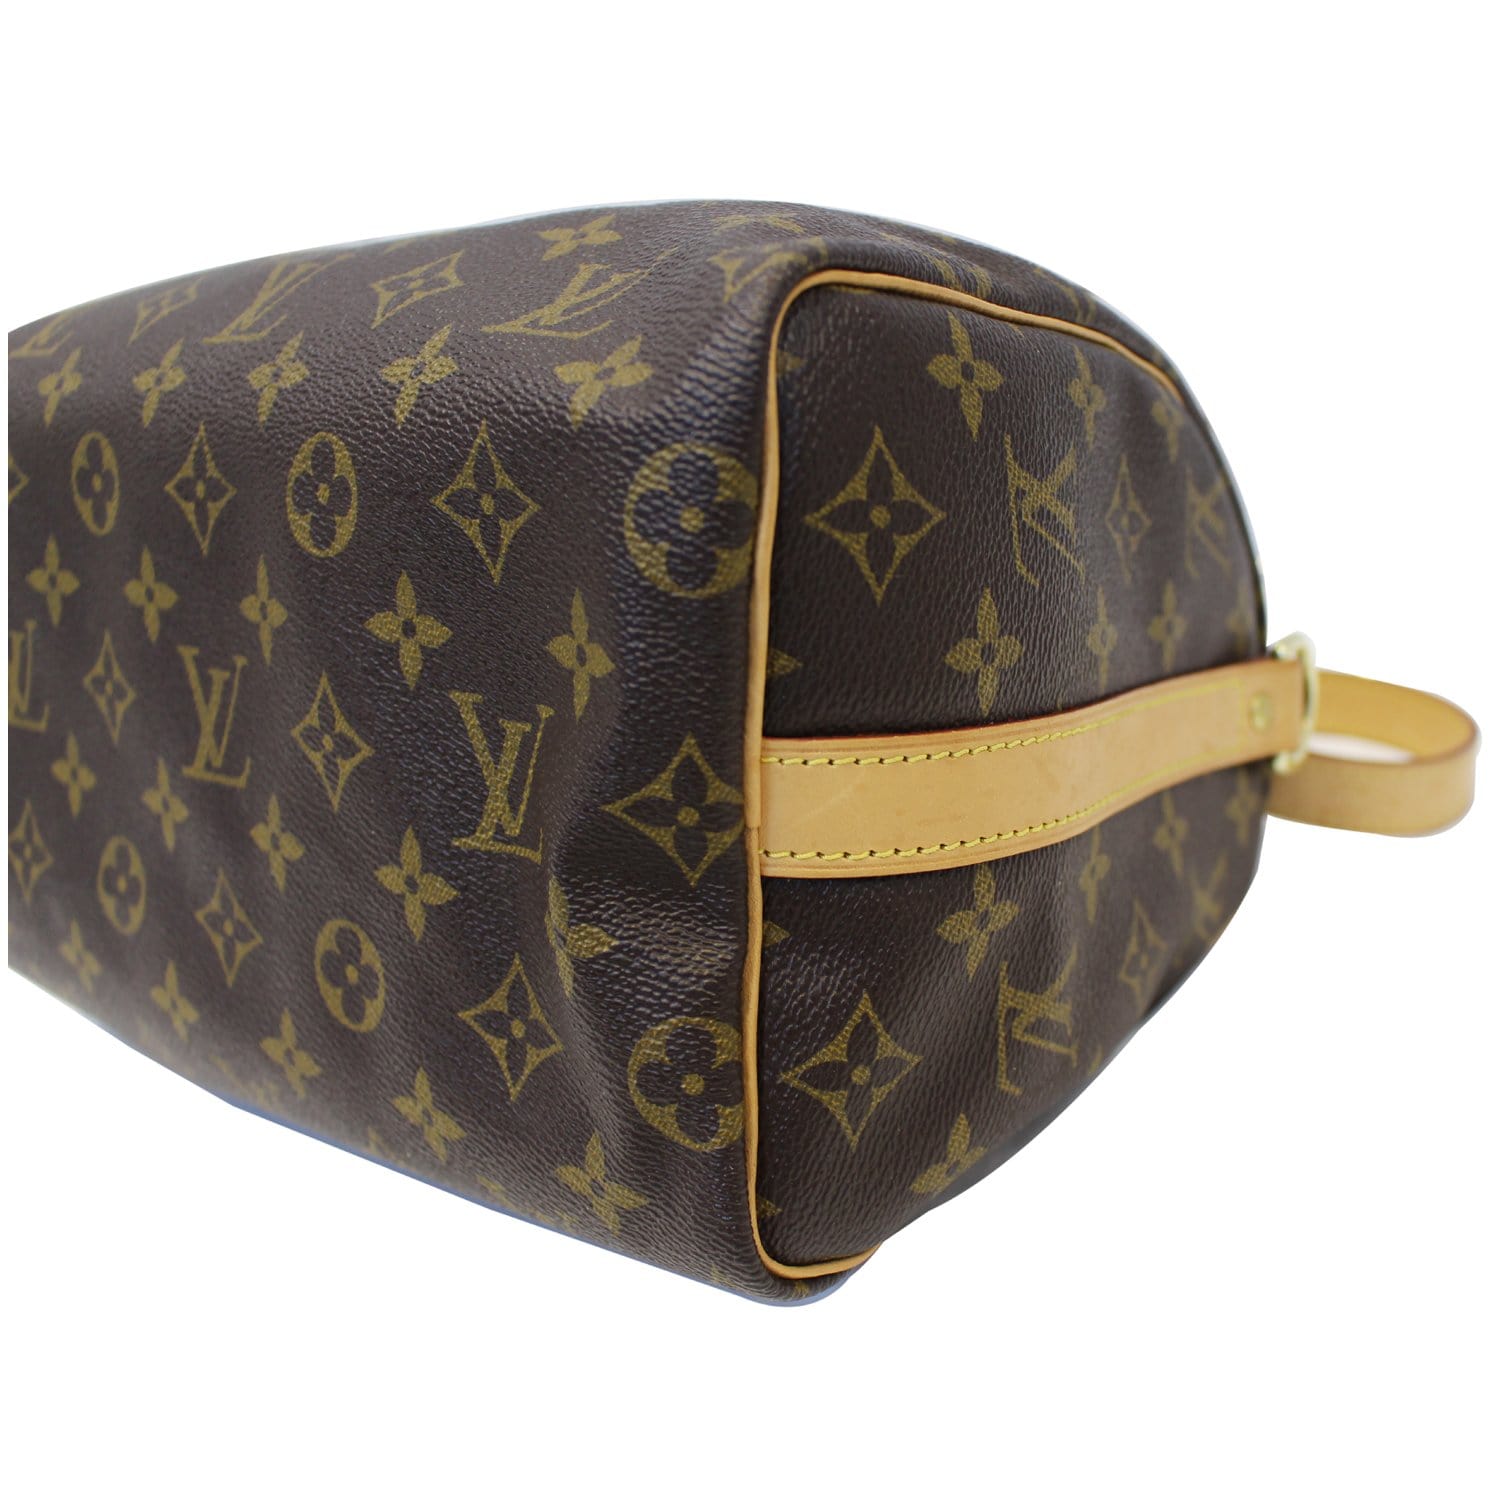 Louis Vuitton Speedy Shoulder bag 395571